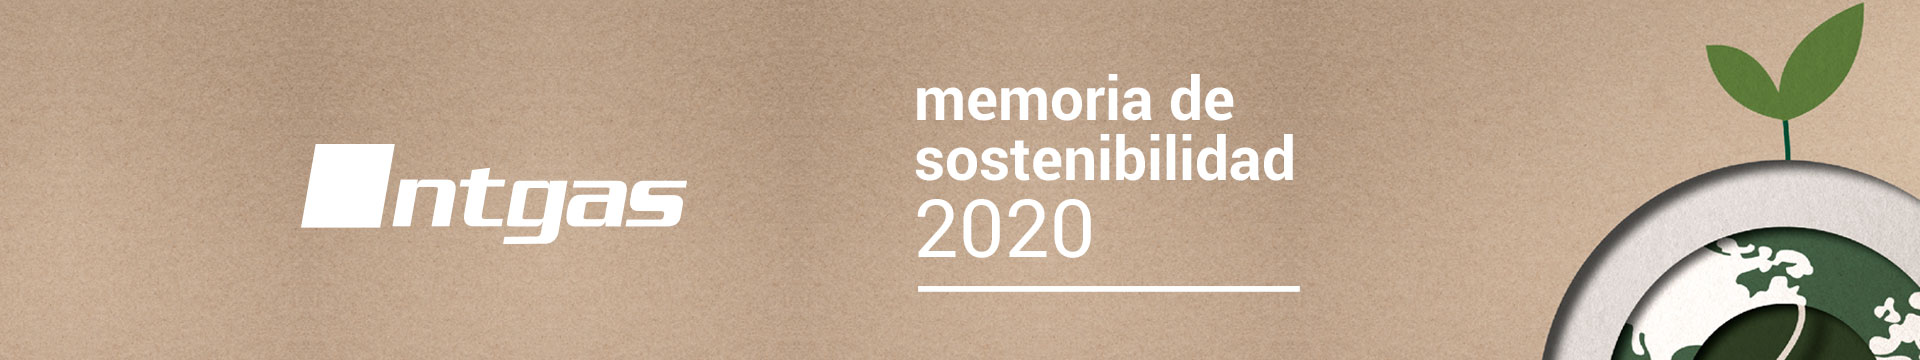 Memoria sostenibilidad 2020